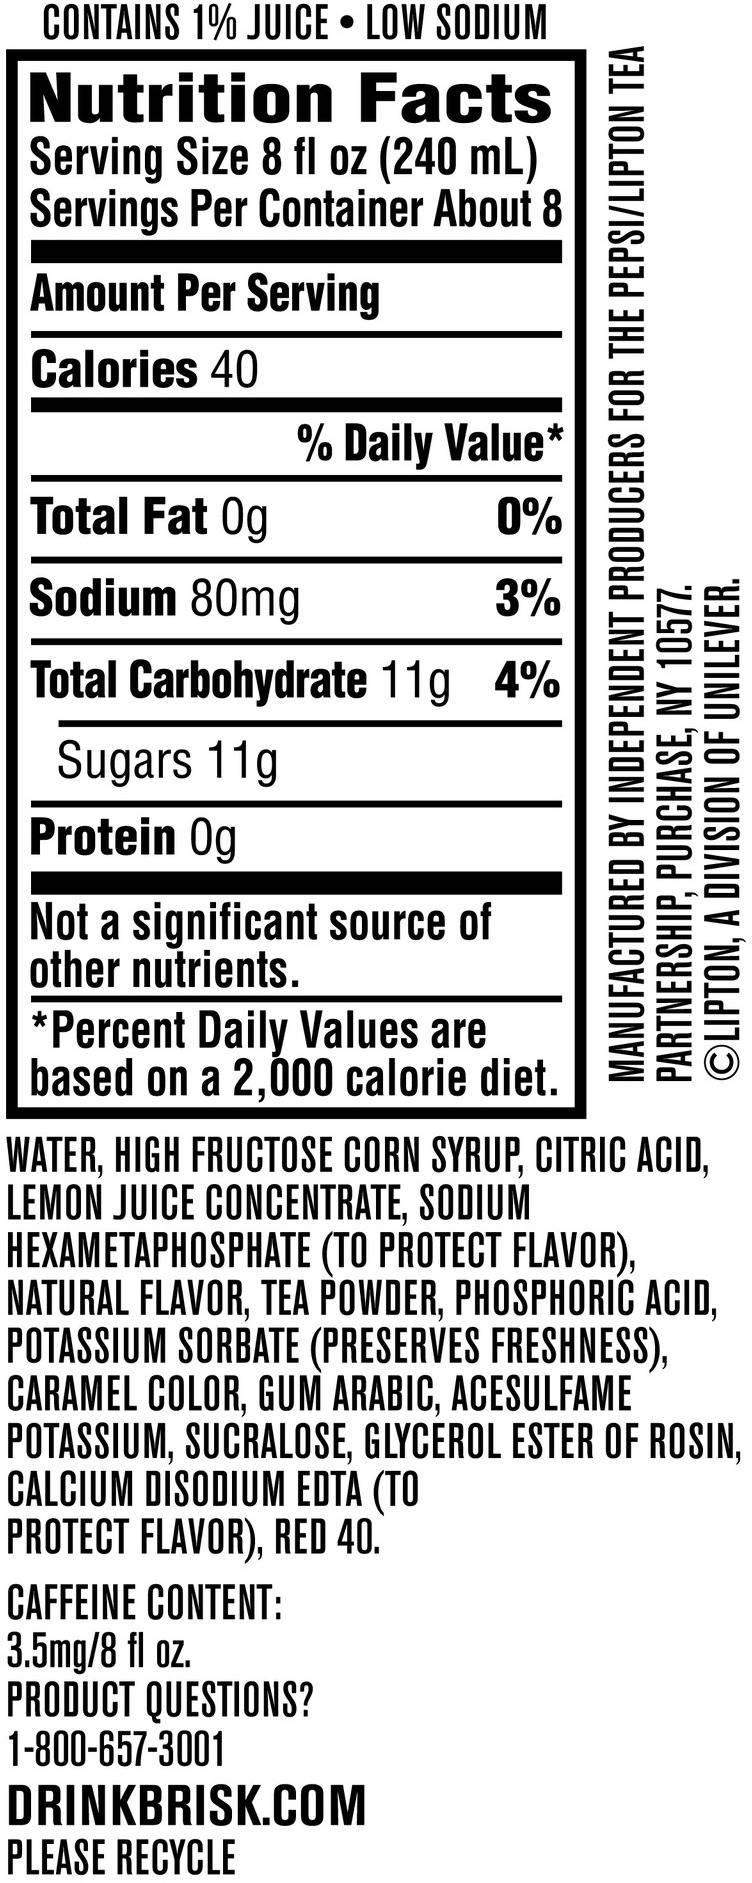 Image describing nutrition information for product Brisk Tea Lemonade